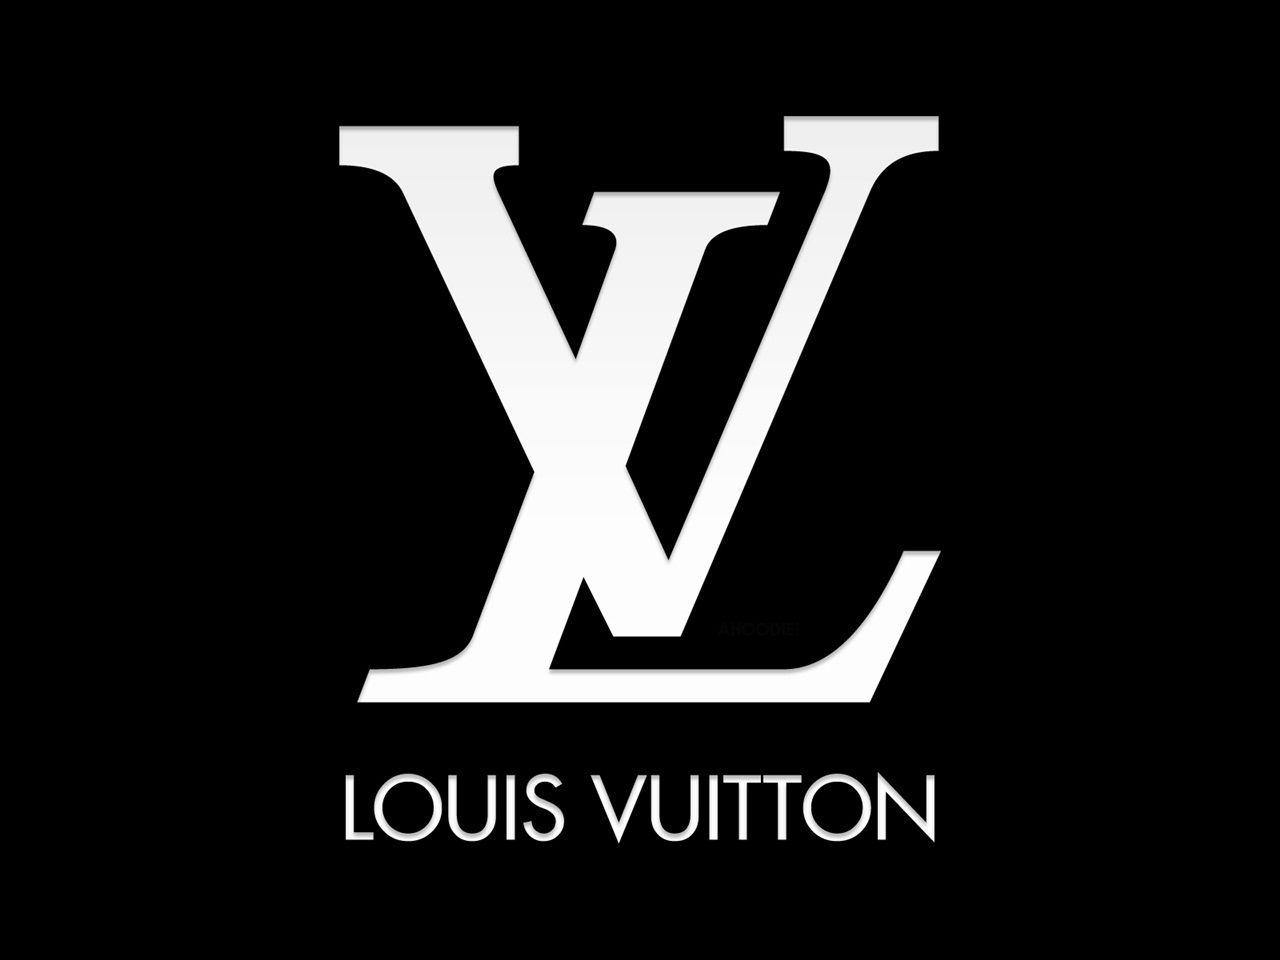 Louis Vuitton Logo. Download louis vuitton logo wallpaper